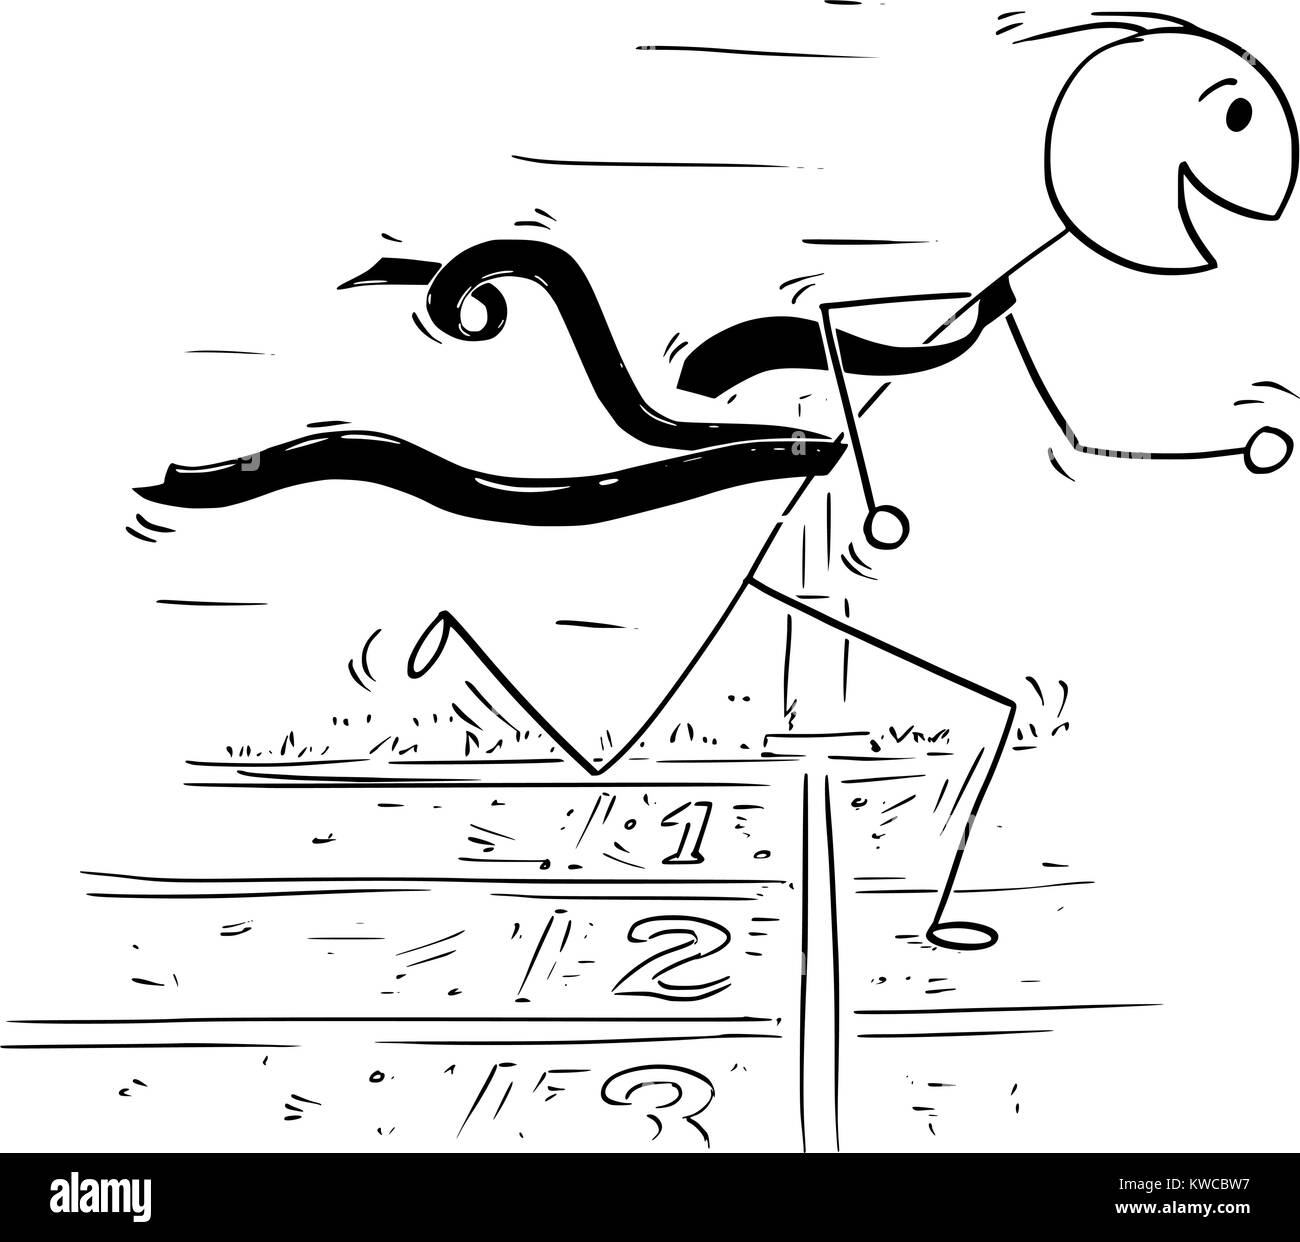 Cartoon stick man drawing conceptual illustration of businessman running at the finish line, winning the race. Concept of business success against com Stock Vector